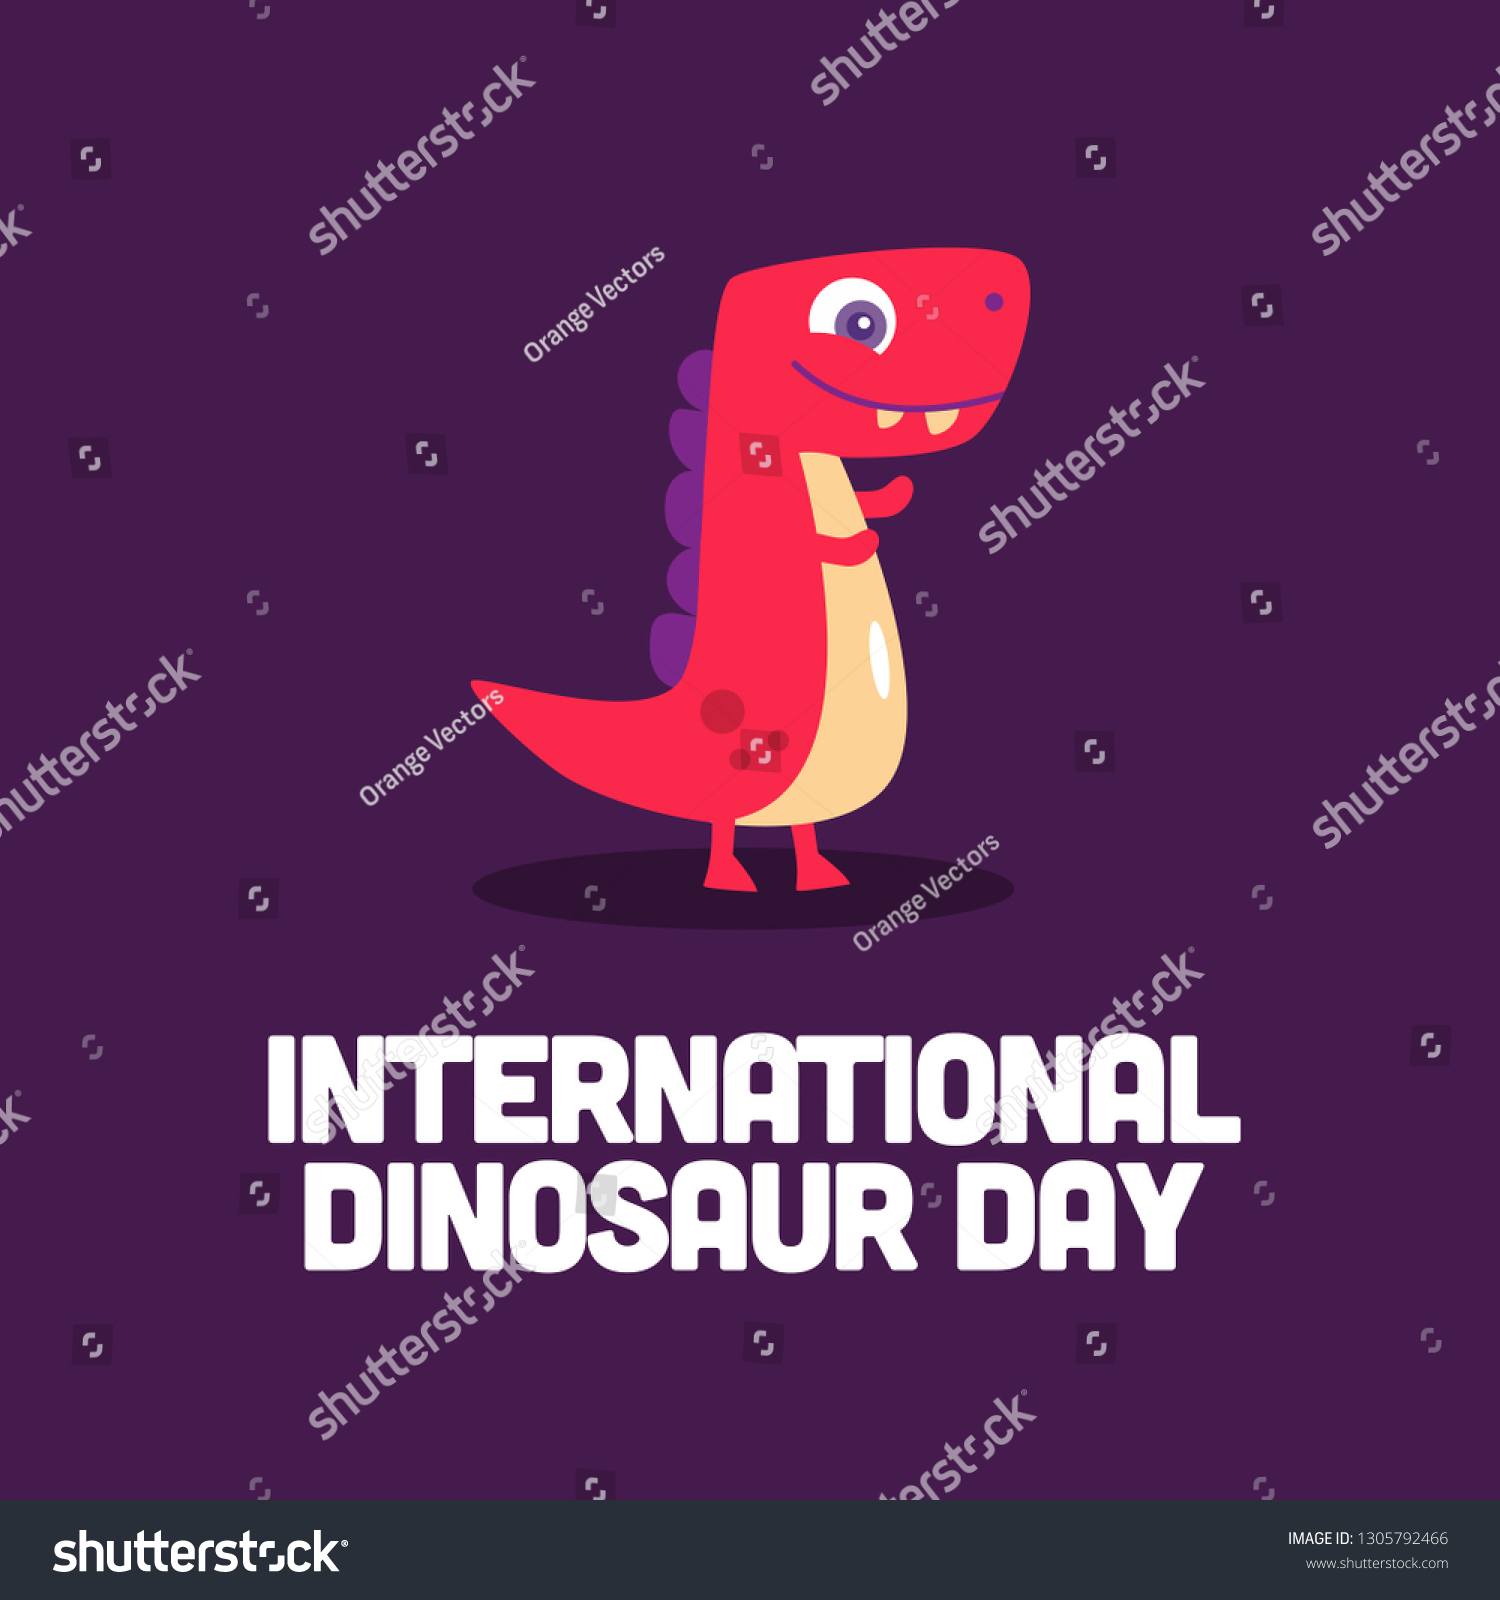 International Dinosaur Day Poster Design Stock Vector (Royalty Free